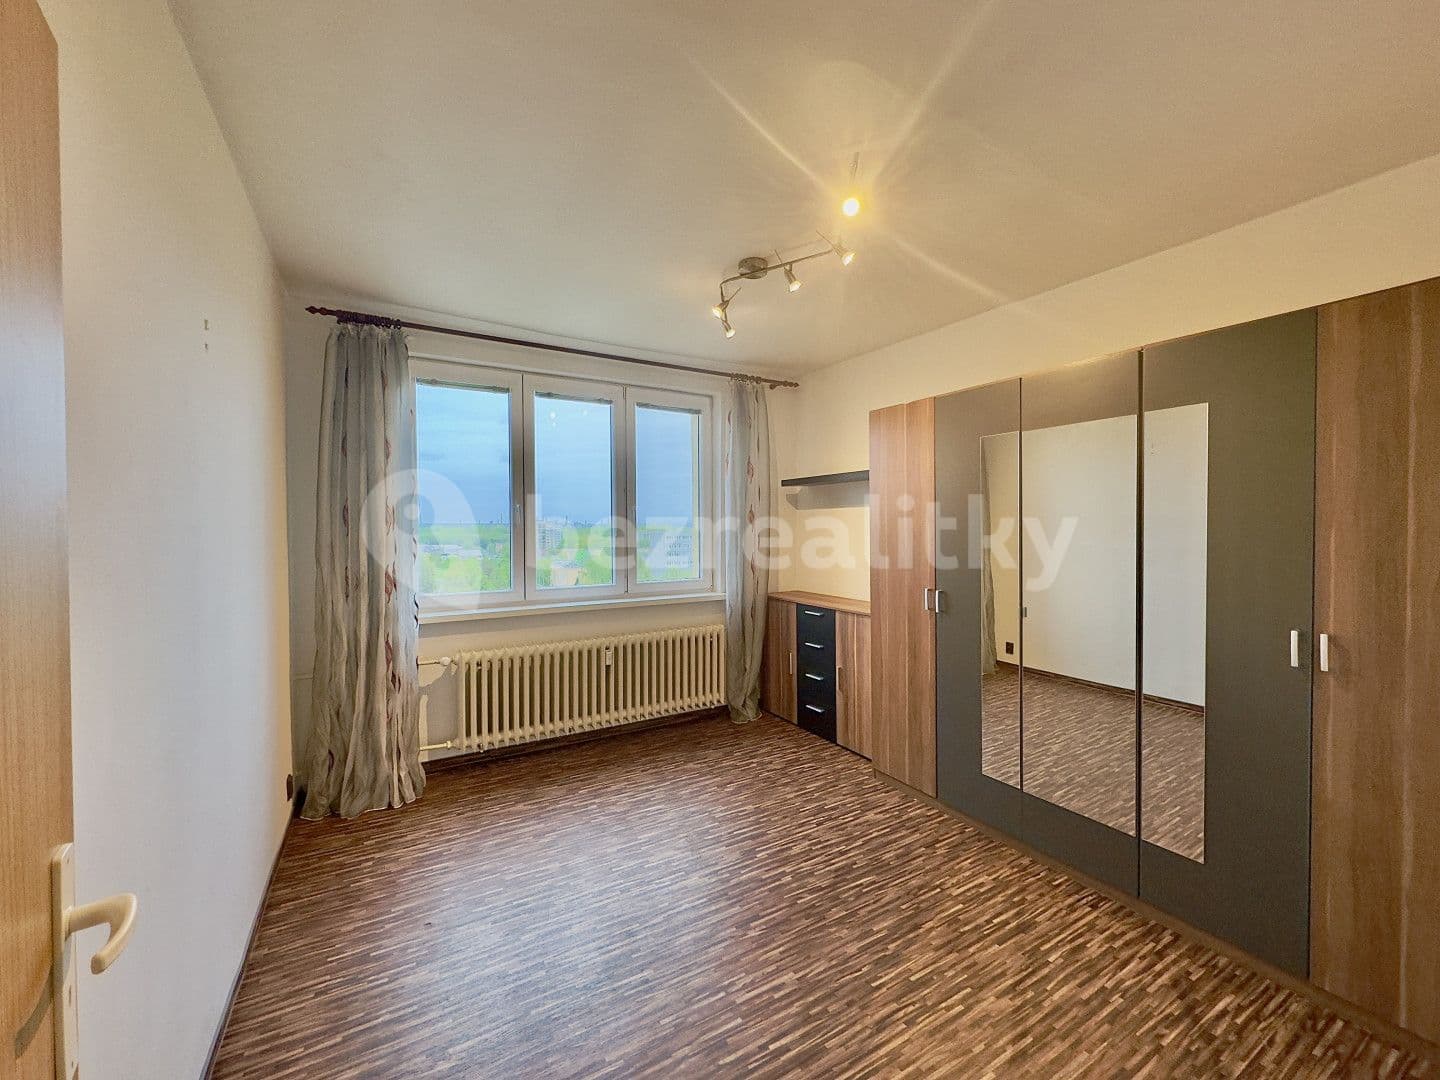 2 bedroom flat for sale, 52 m², Dvouletky, Ostrava, Moravskoslezský Region